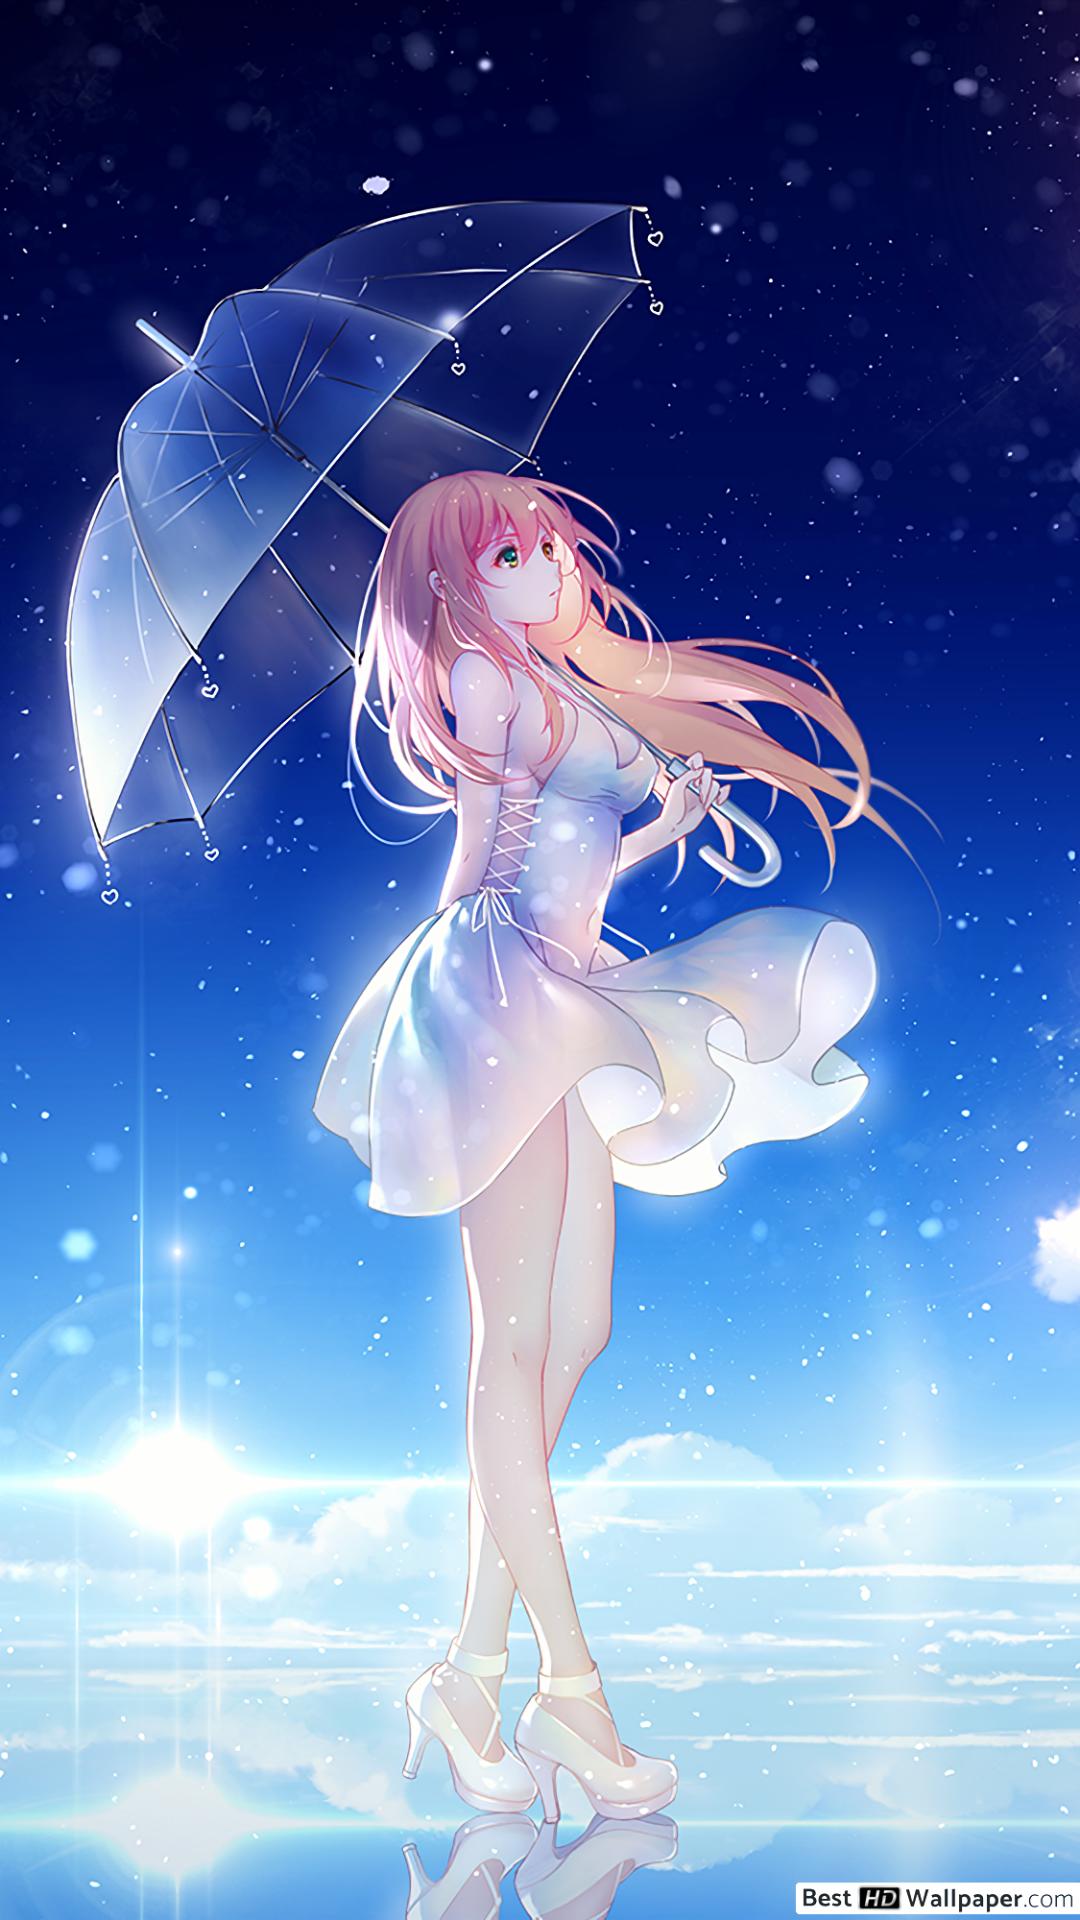 HD Anime Girl iPhone Wallpaper [1080x1920] : r/iWallpaper